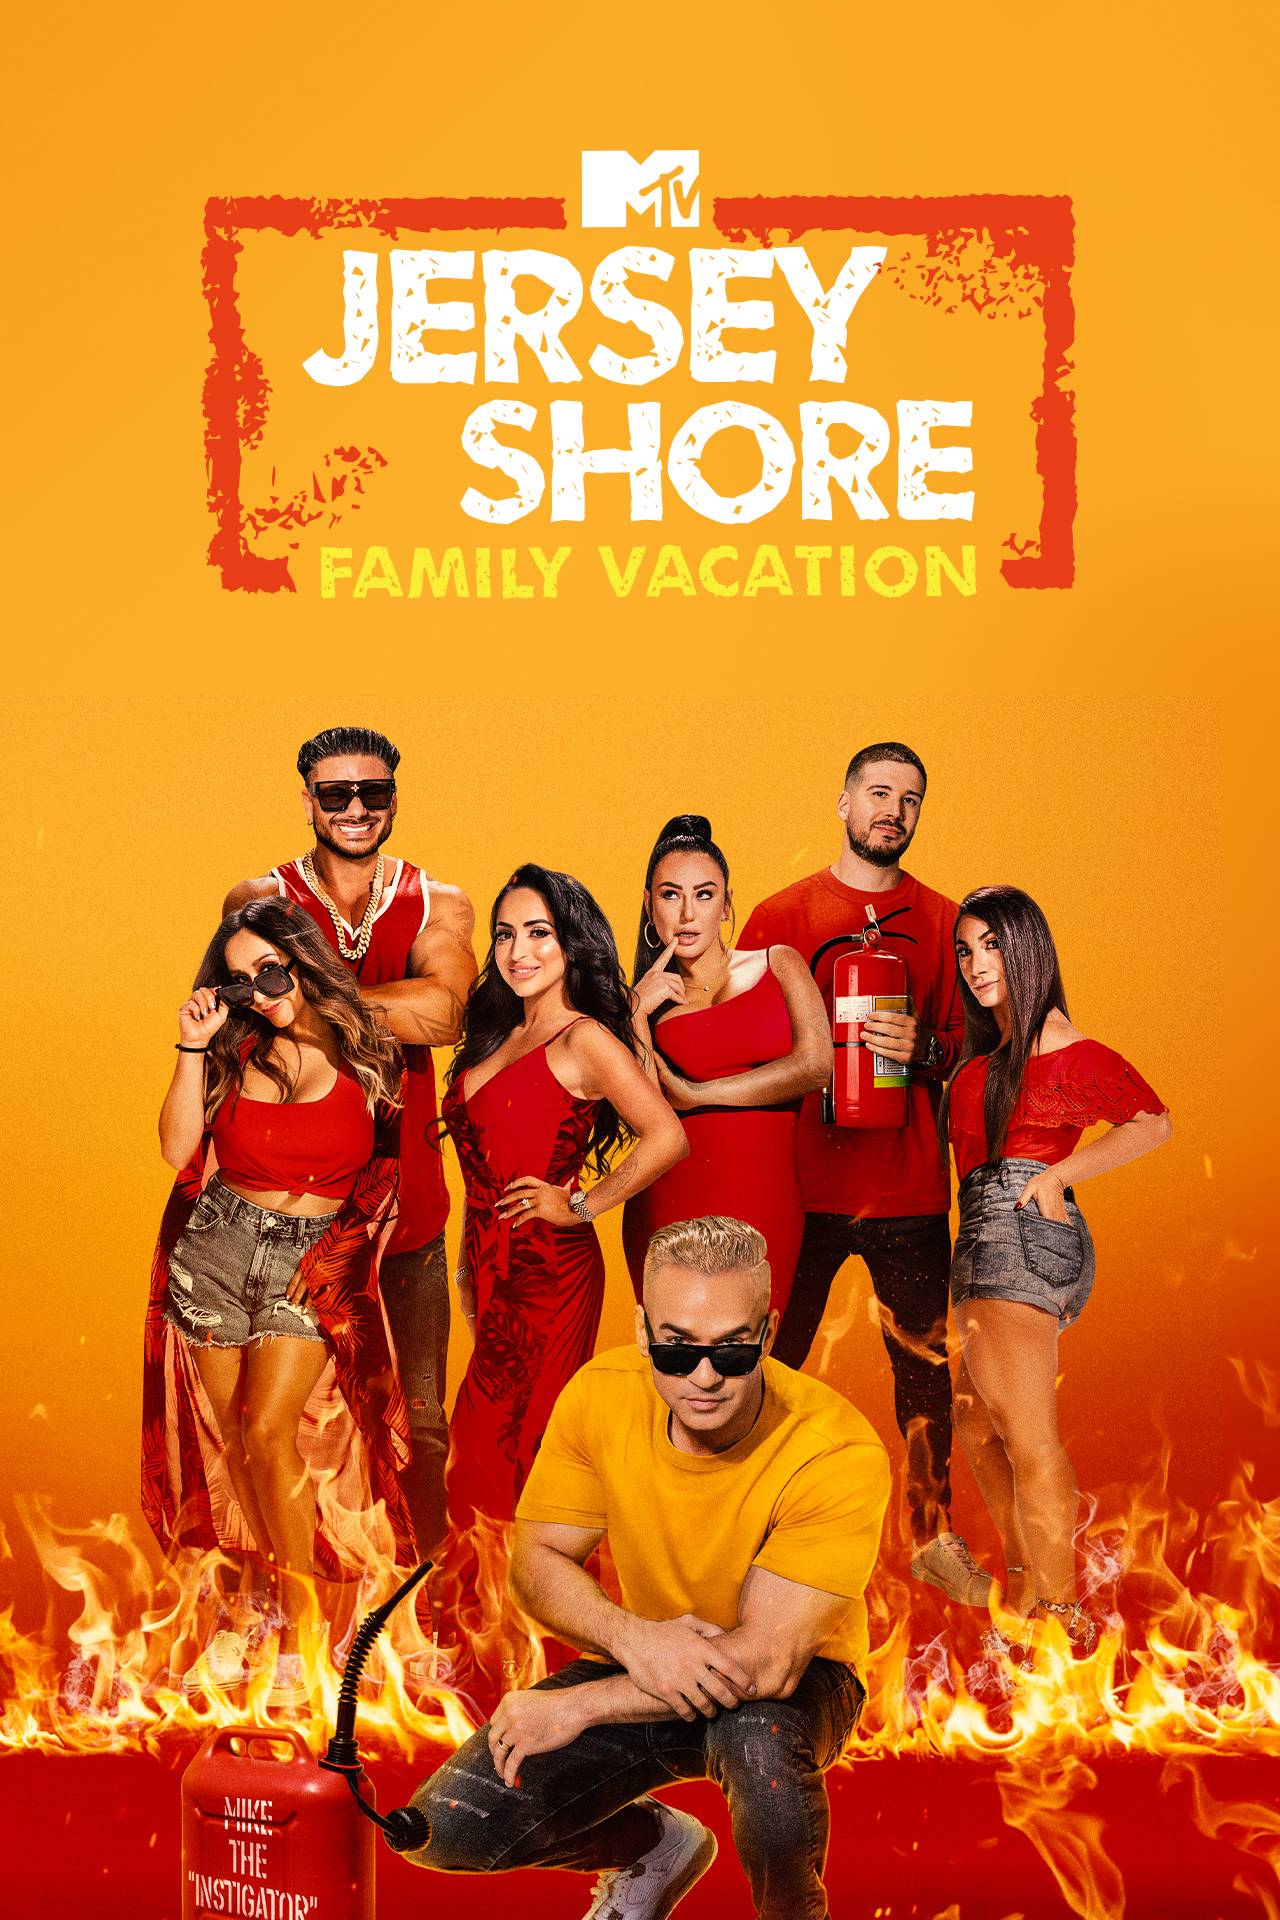 jersey shore season 2 reunion online free